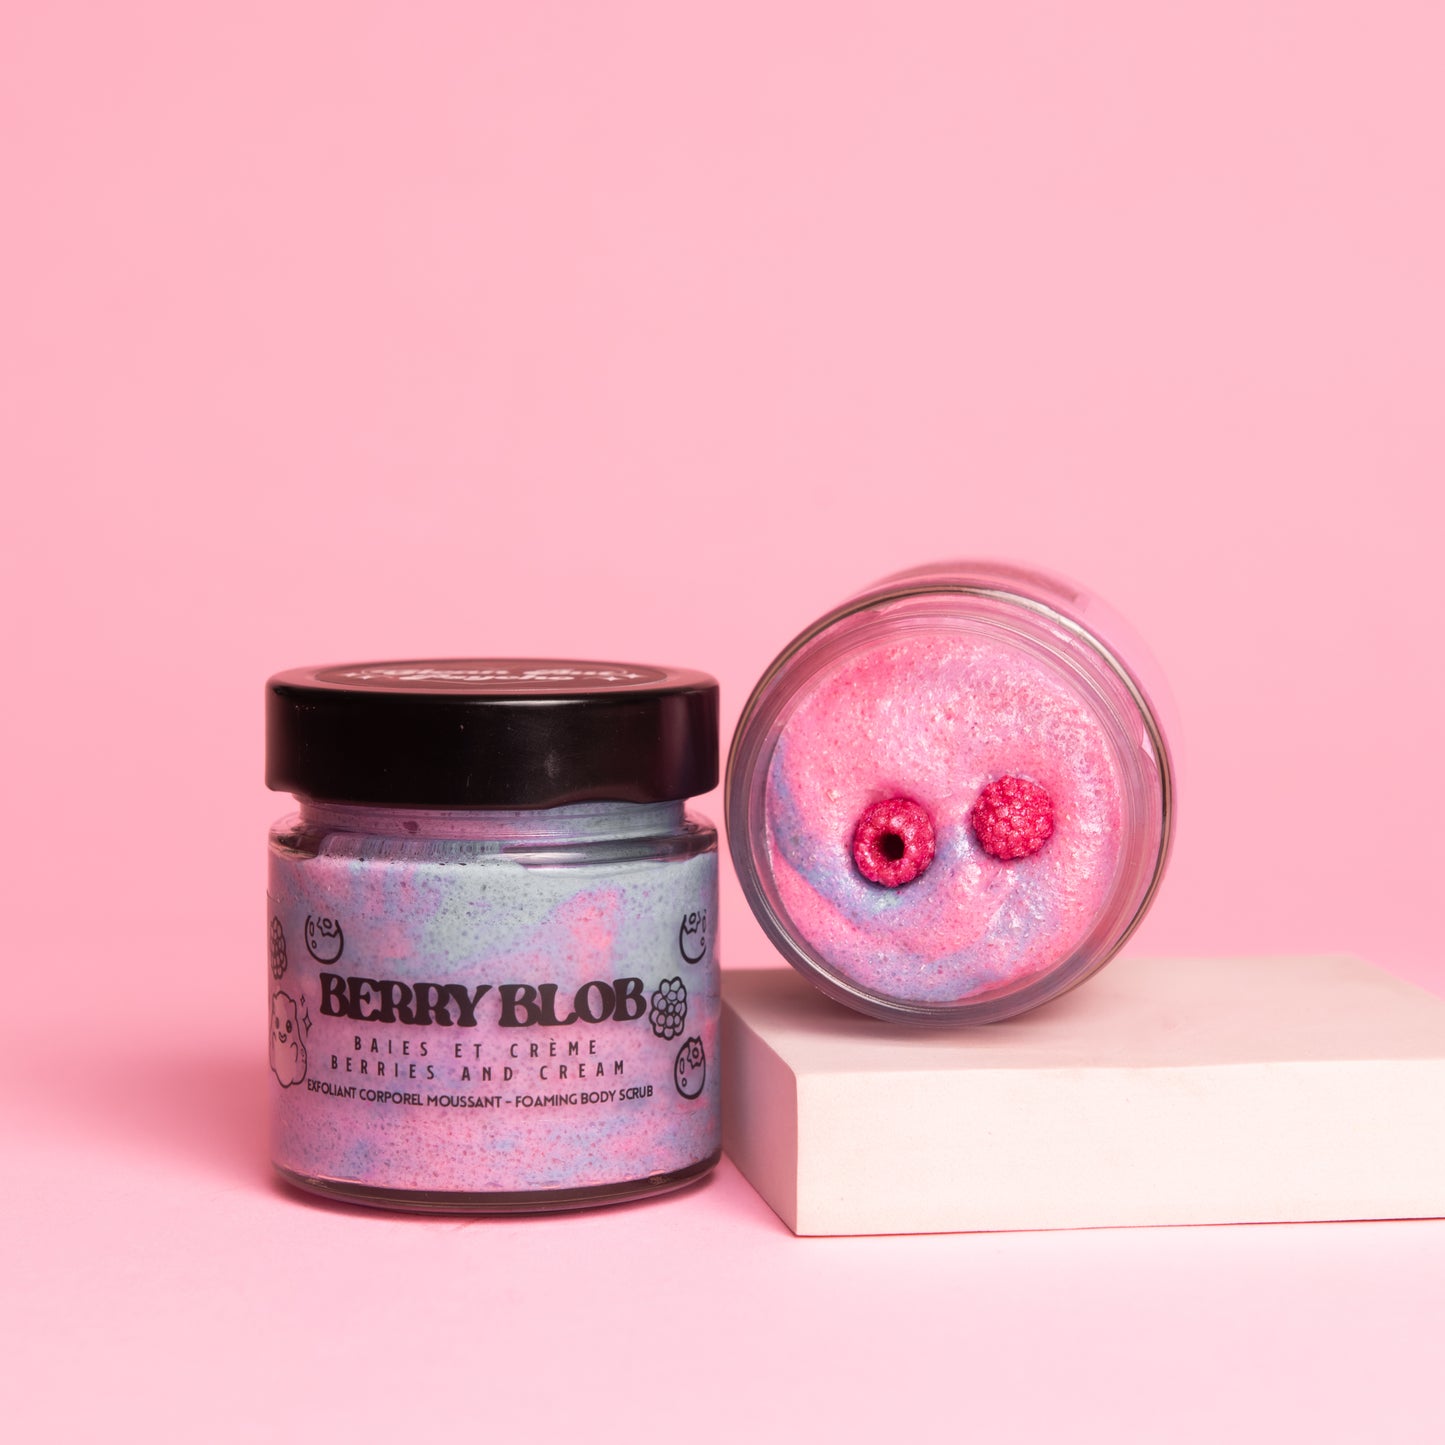 Foaming Body Scrub - Berry Blob 🫐